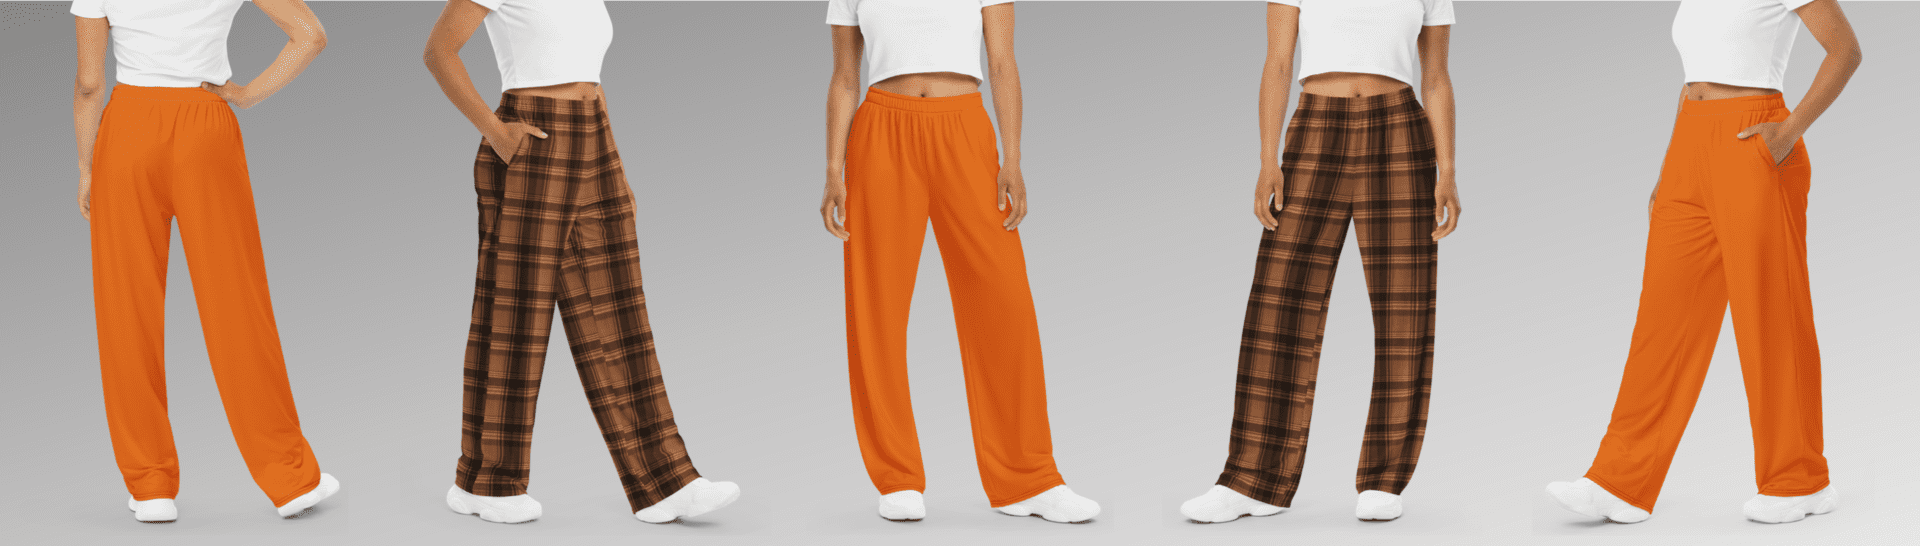 Five models wearing orange and plaid pants.